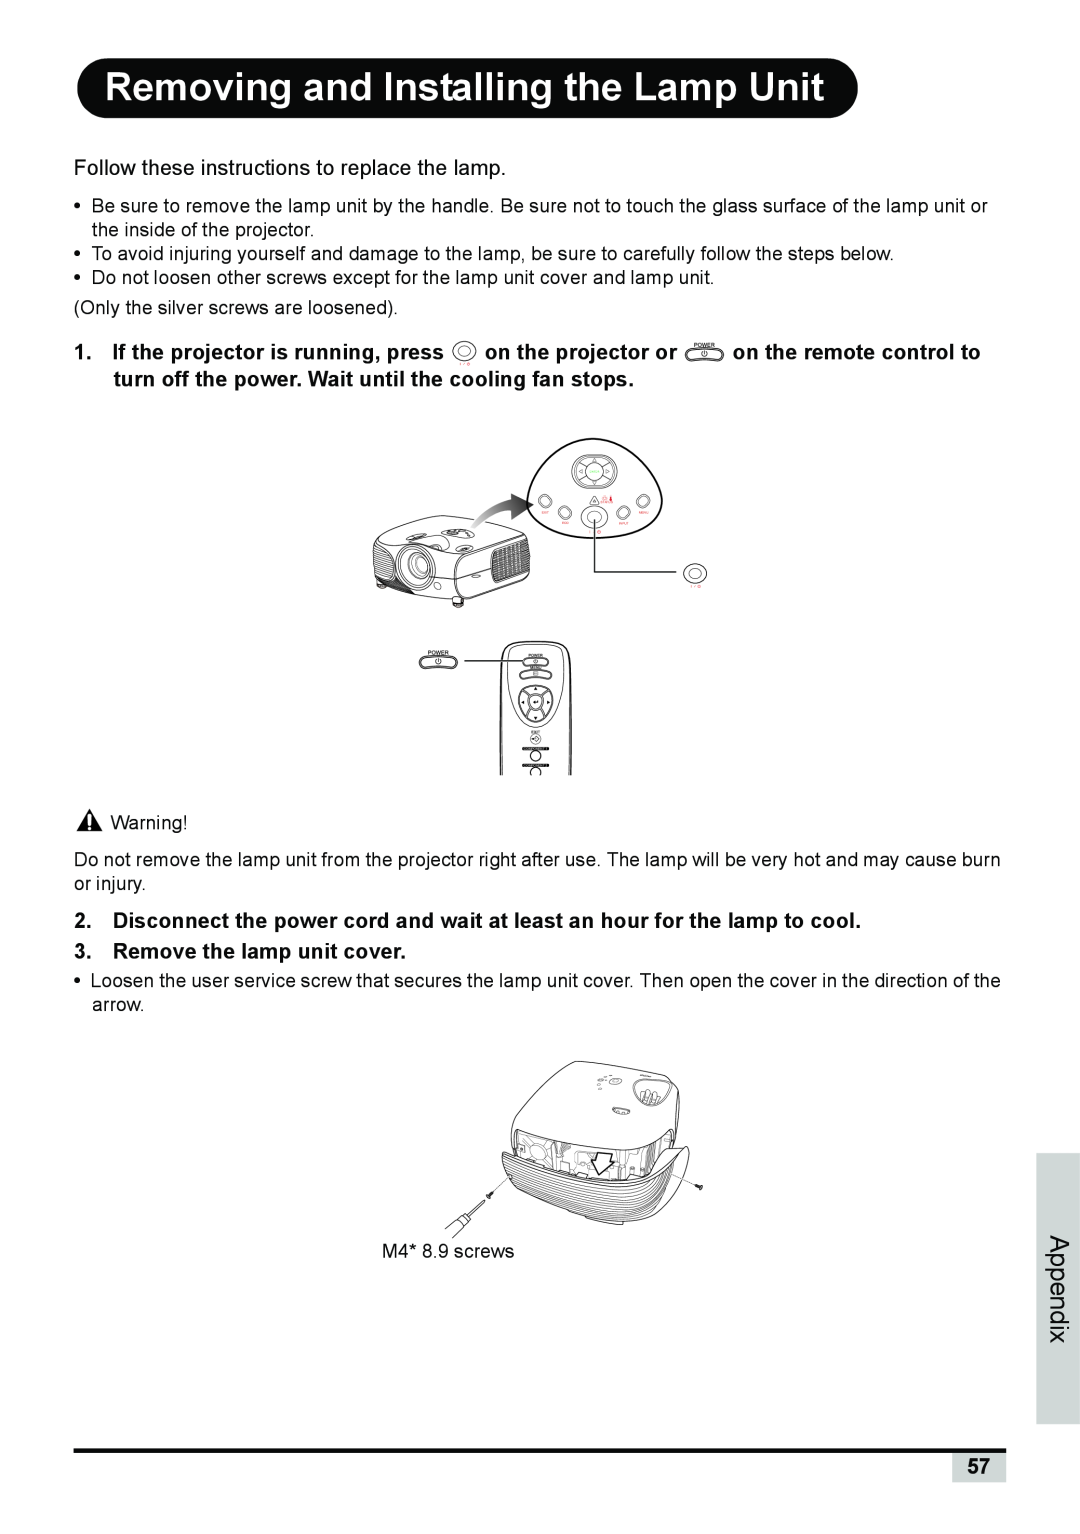 BOXLIGHT PREMIERE 30HD manual Removing and Installing the Lamp Unit, Remove the lamp unit cover, Appendix 